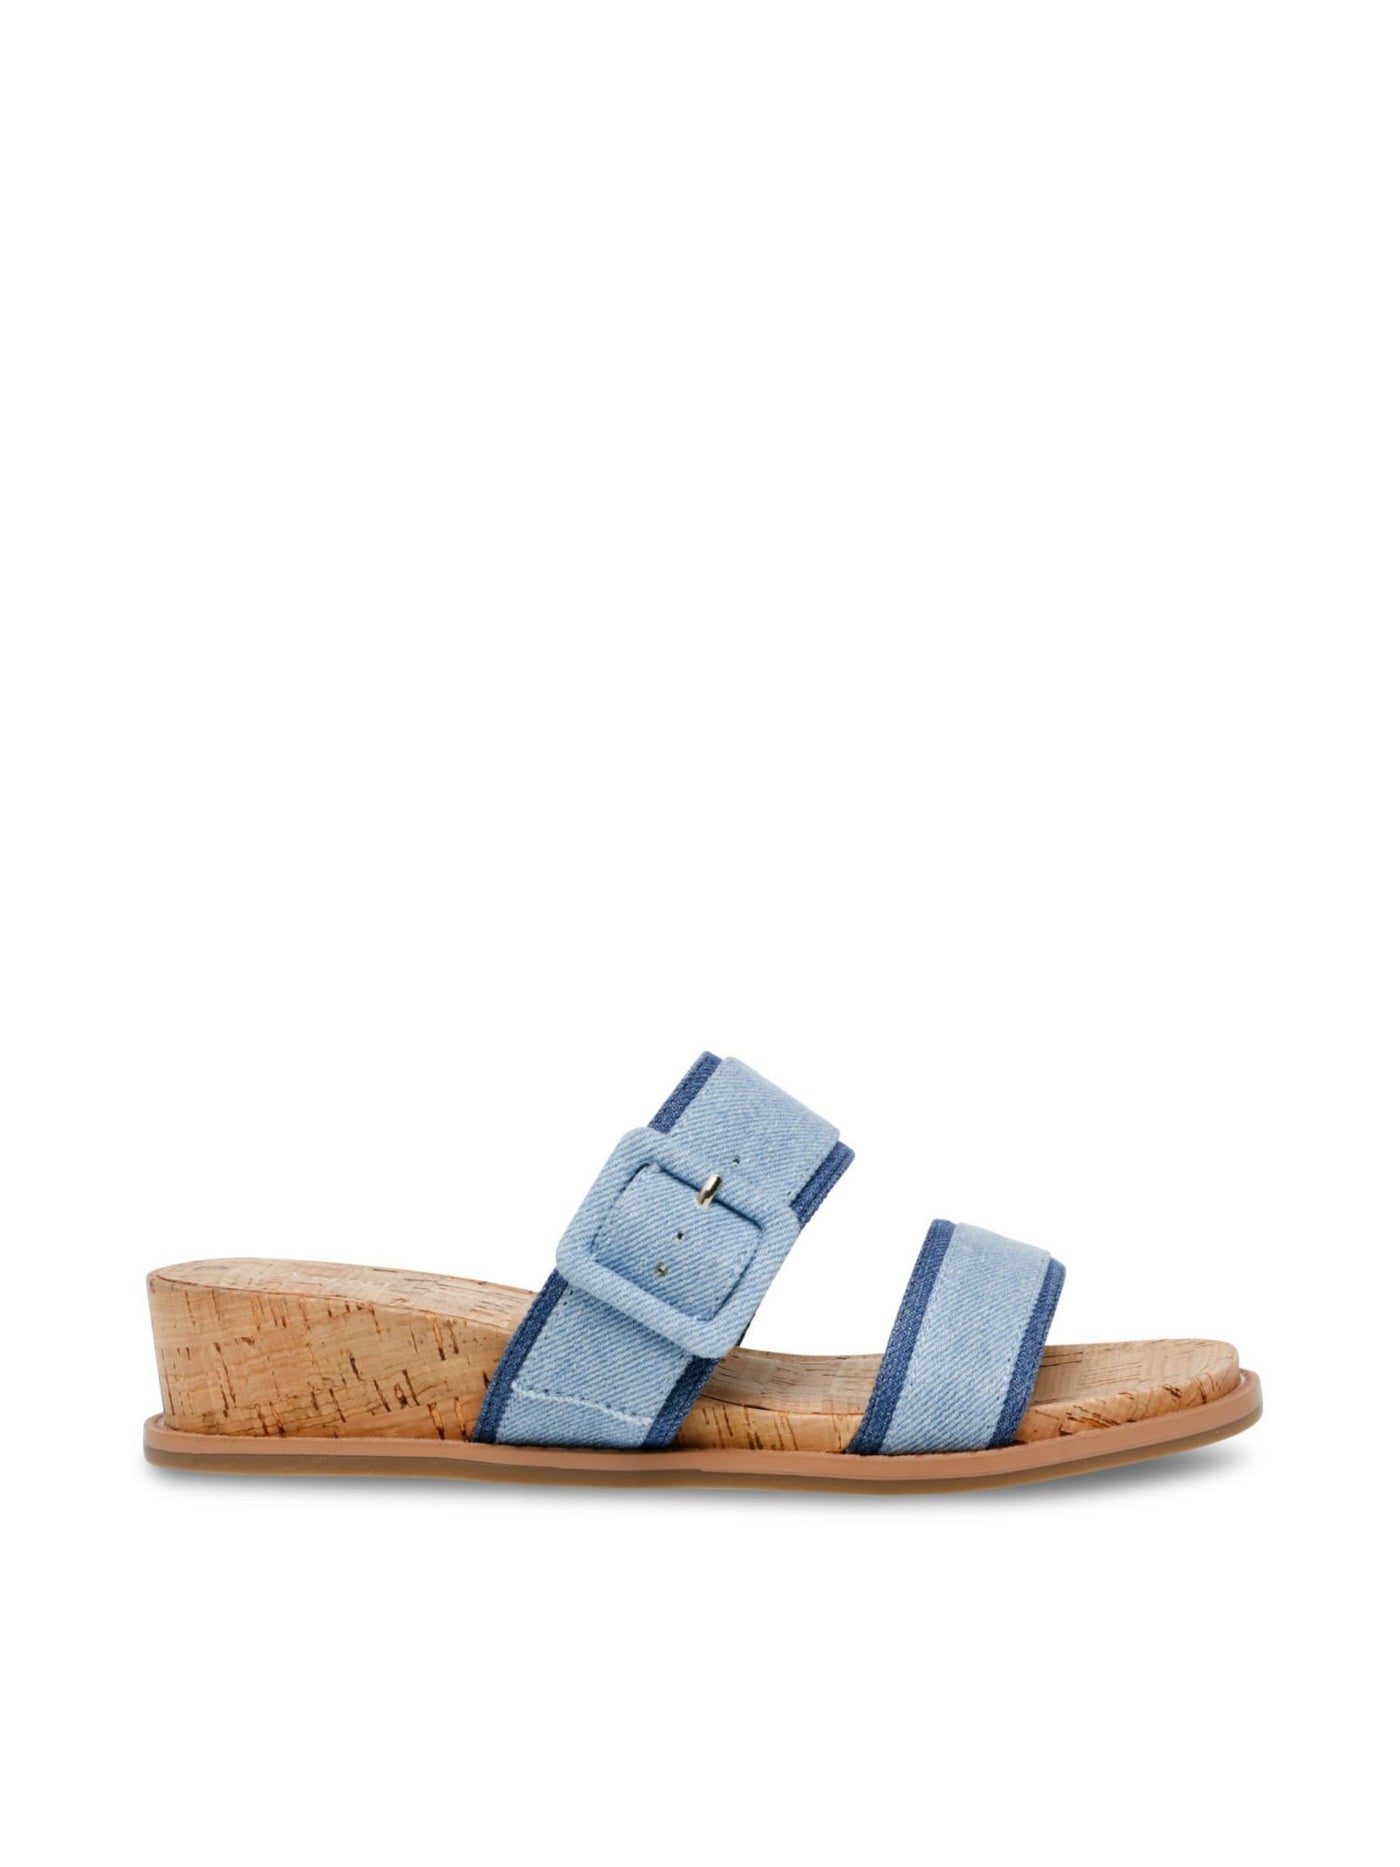 ANNE KLEIN Womens Blue Buckle Accent Comfort Brenda Round Toe Wedge Slip On Slide Sandals Shoes 7.5 M